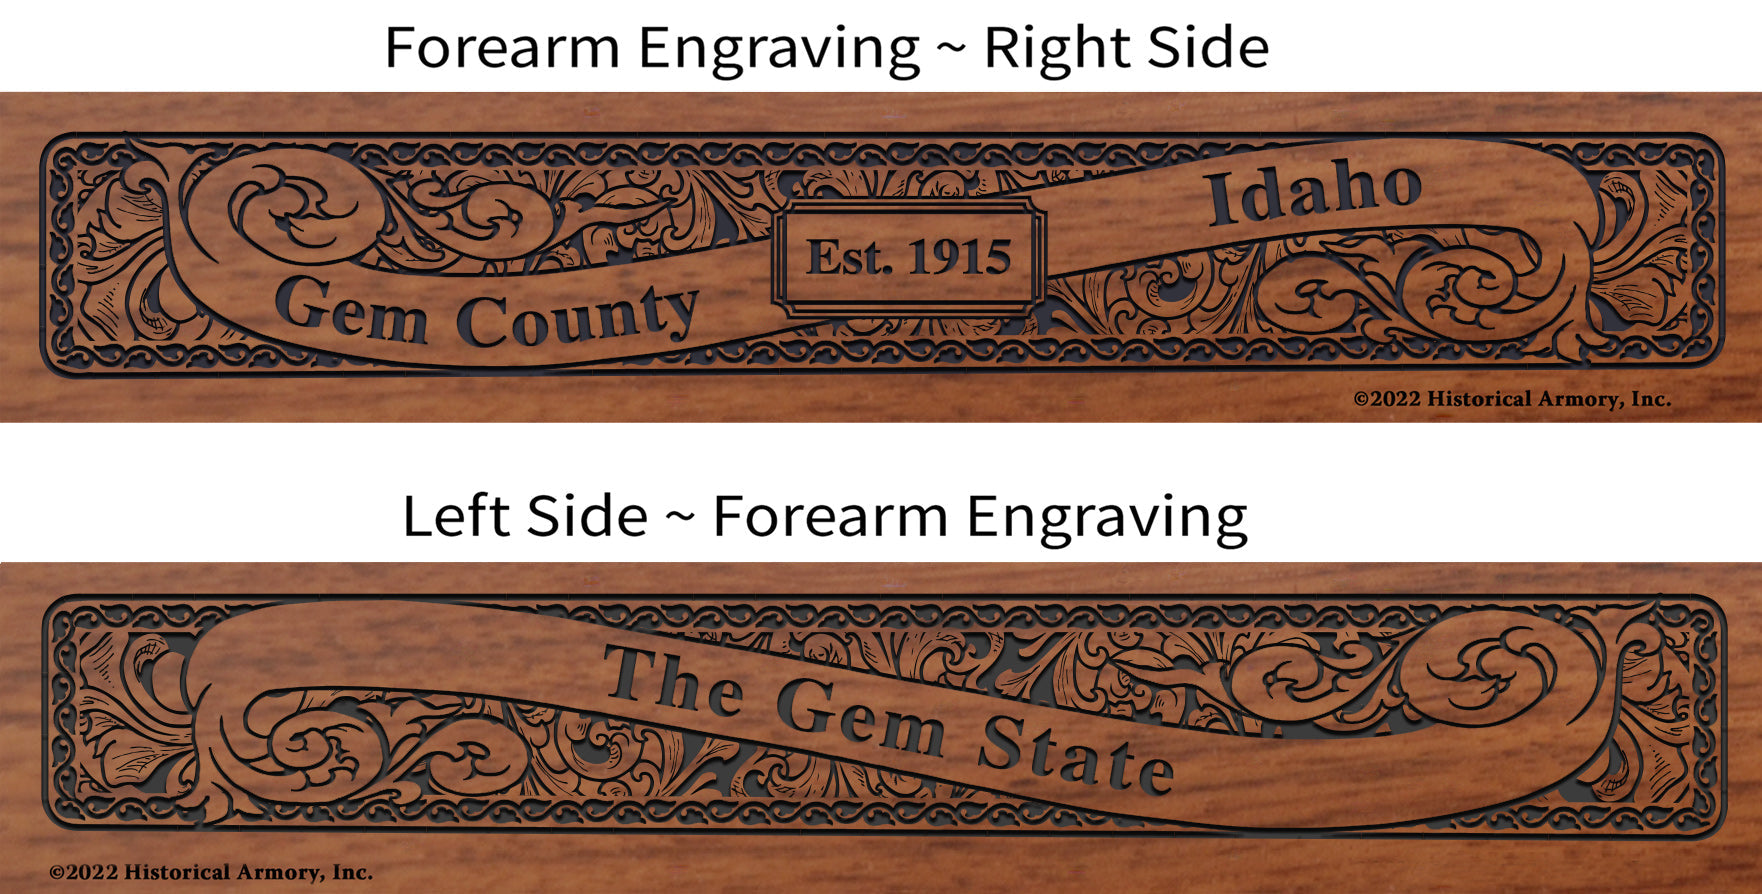 Gem County Idaho Engraved Rifle Forearm